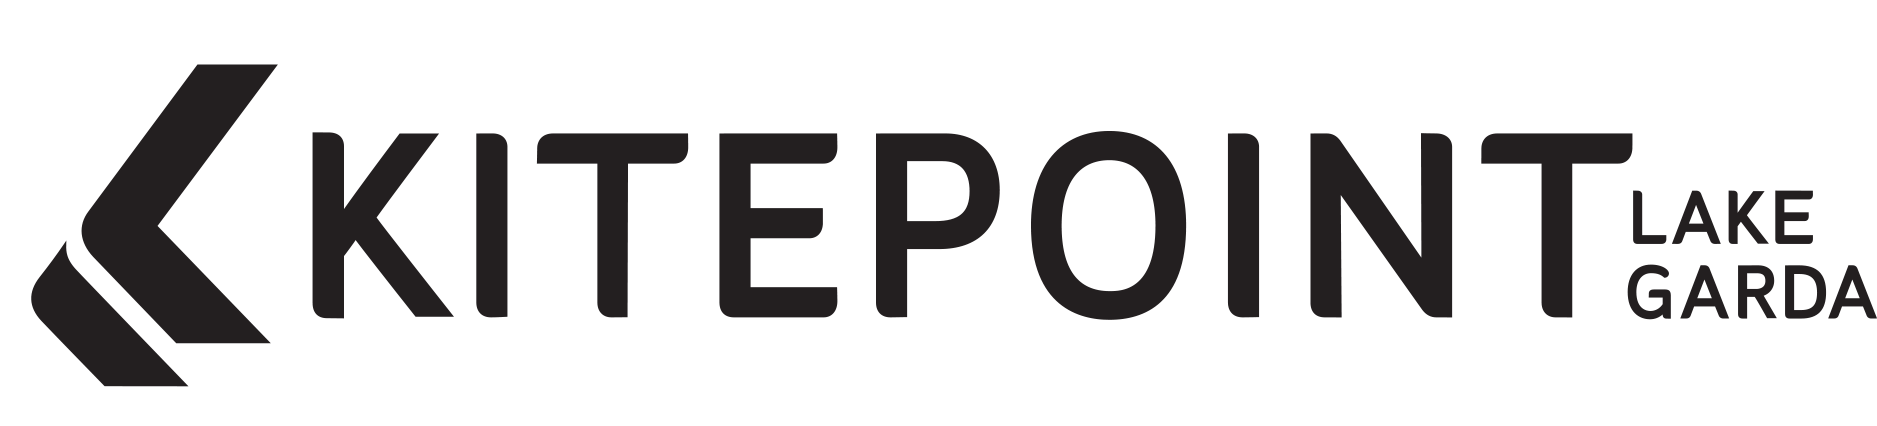 kitepoint_logo_2019_f21b98ec-80b5-4a15-b9ad-30ae06fcaceb